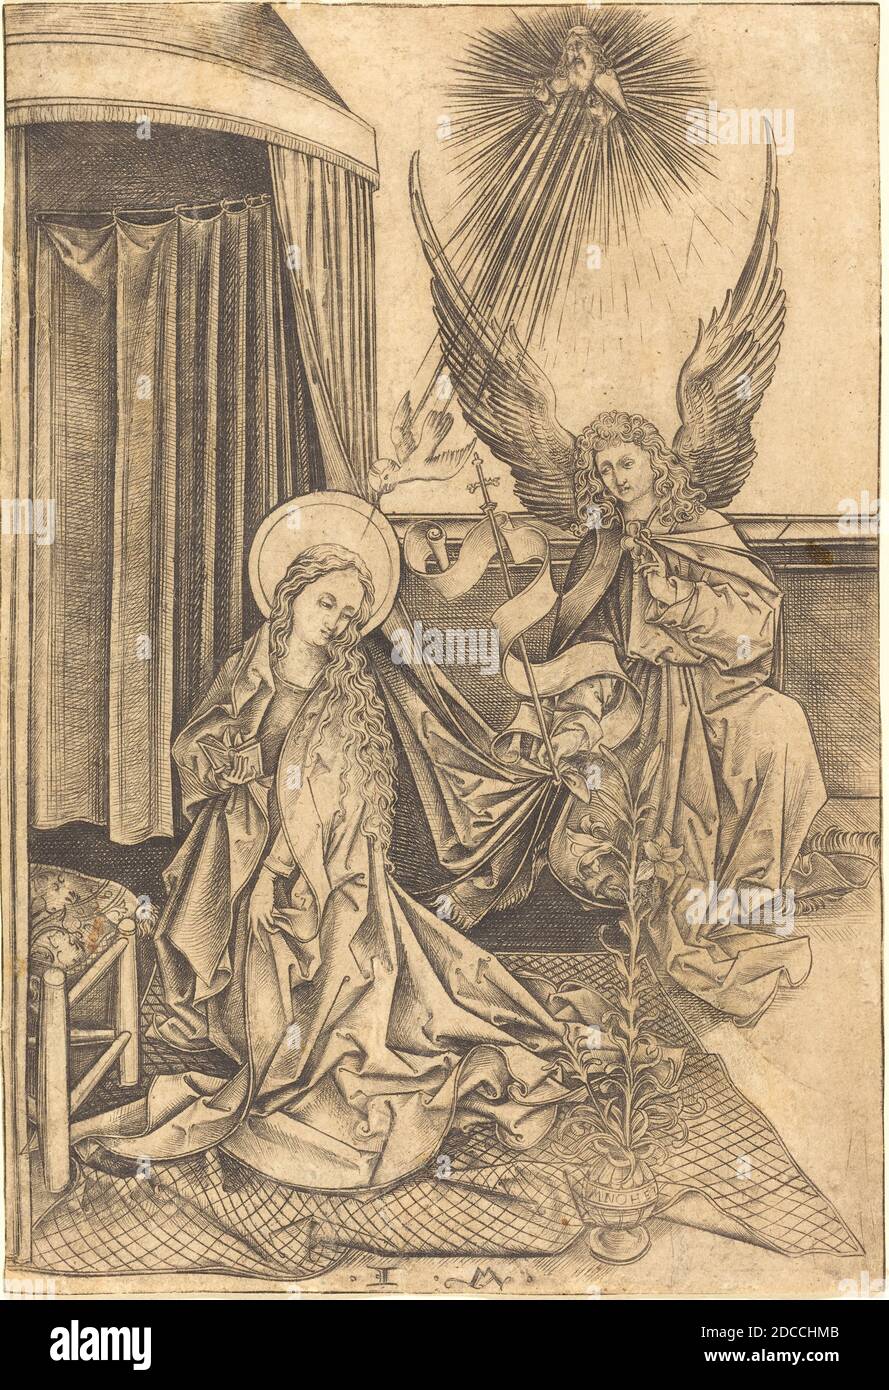 Israhel van Meckenem, (artist), German, c. 1445 - 1503, Martin Schongauer, (artist after), German, c. 1450 - 1491, The Annunciation, c. 1480/1490, engraving Stock Photo